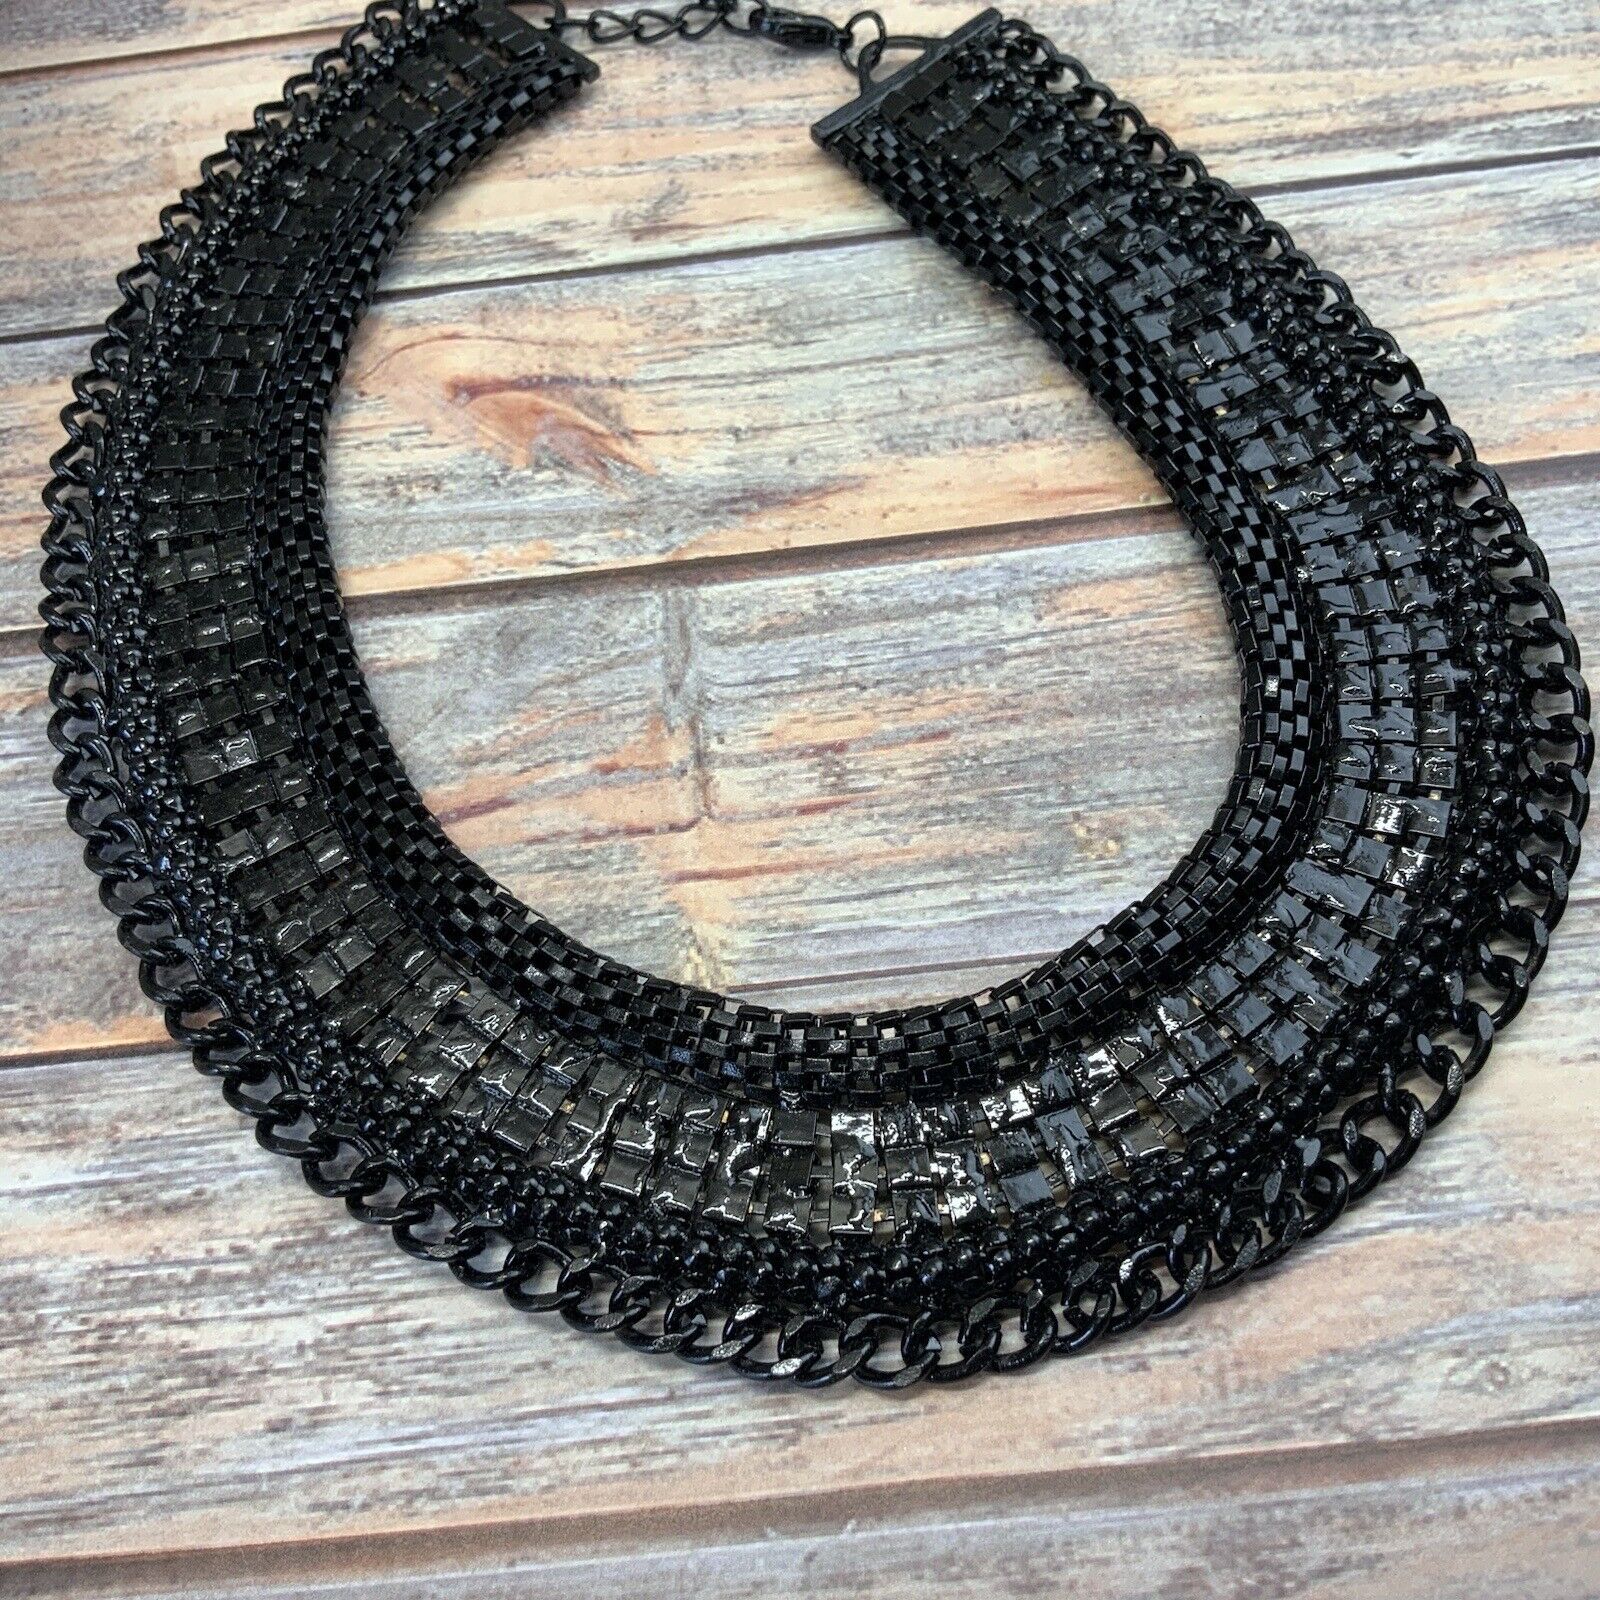 Mesh rhinestone wide choker necklace in black - image 5